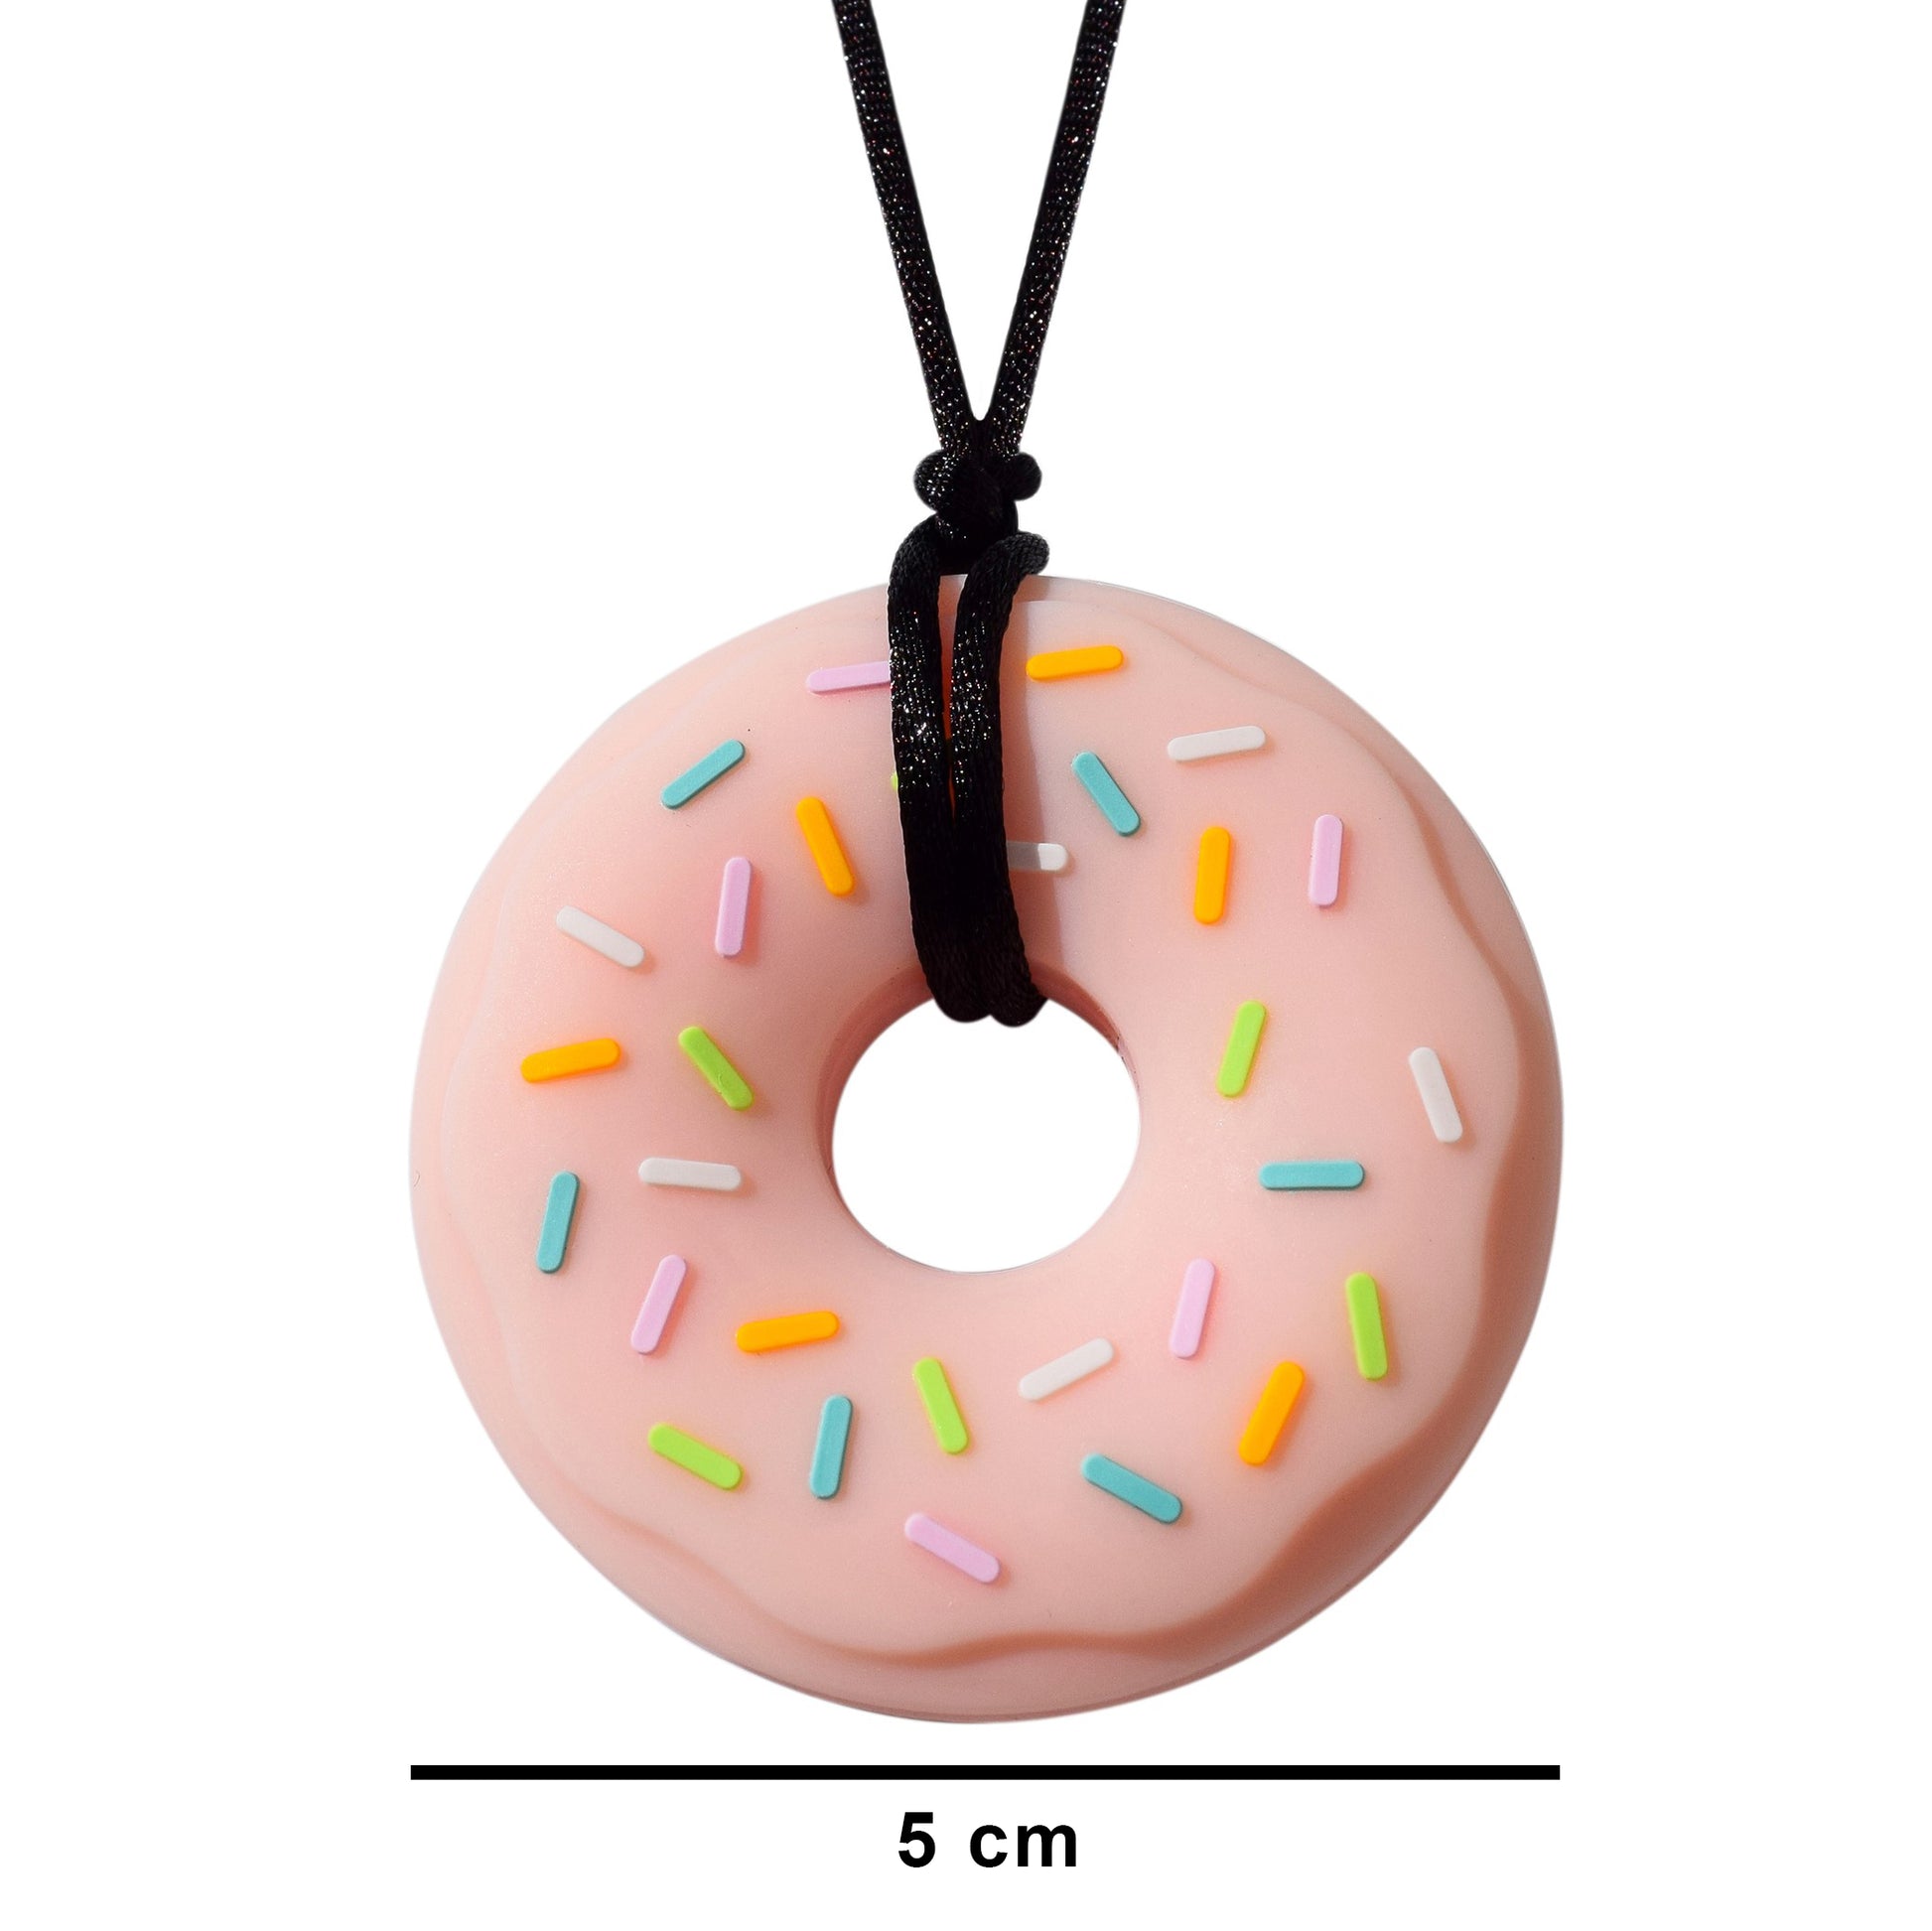 Munchables Donut Chew Necklaces measure 5cm in diameter.